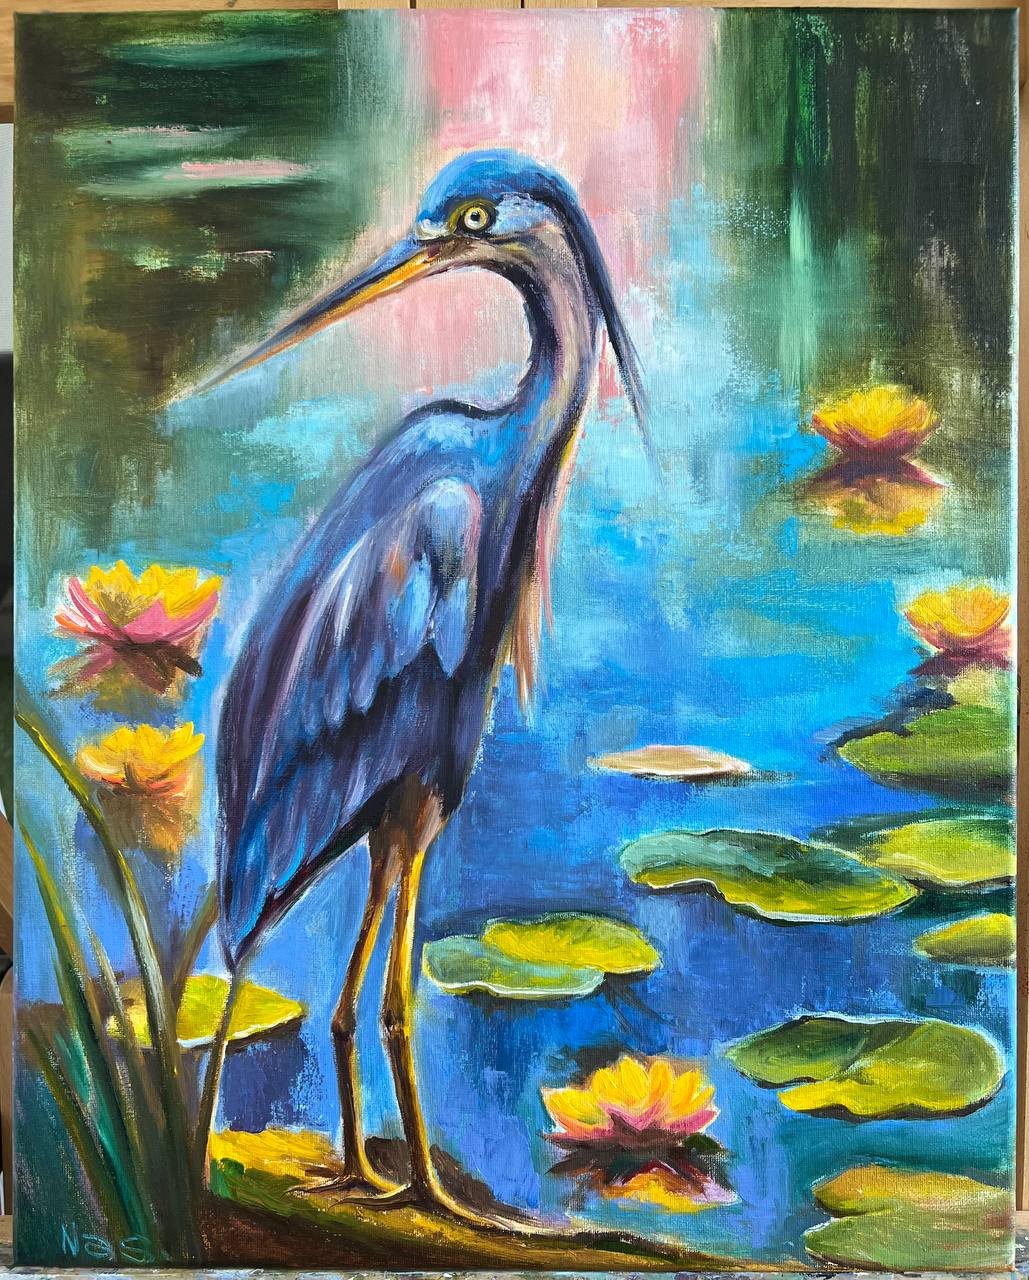 Blue Heron on the Pond